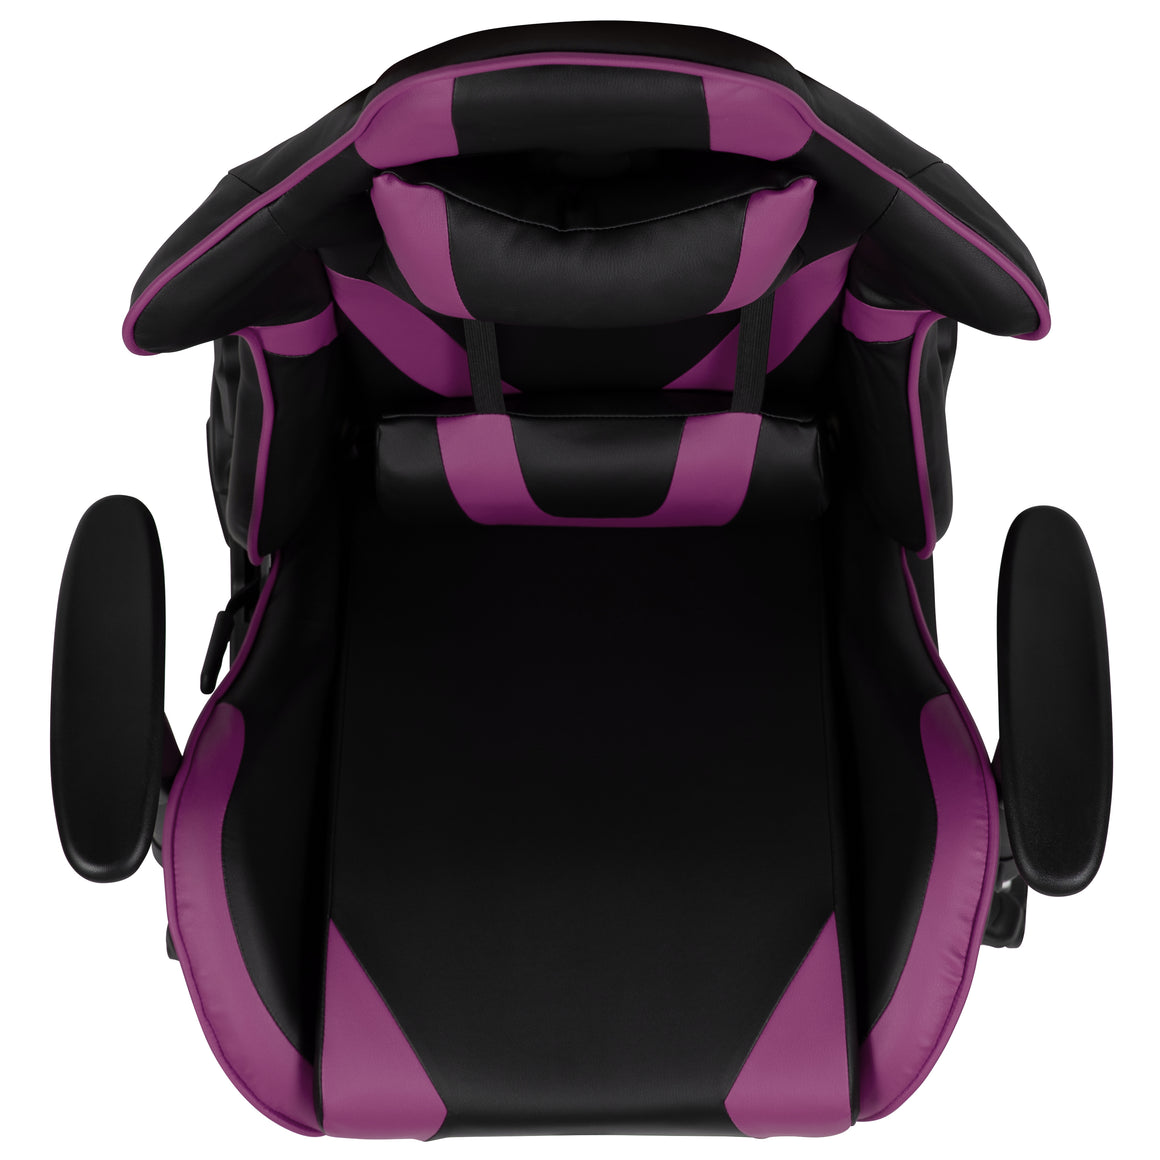 Gaming Racing Ergonomic Computer Chair - X20 Purple - Man Cave Boutique